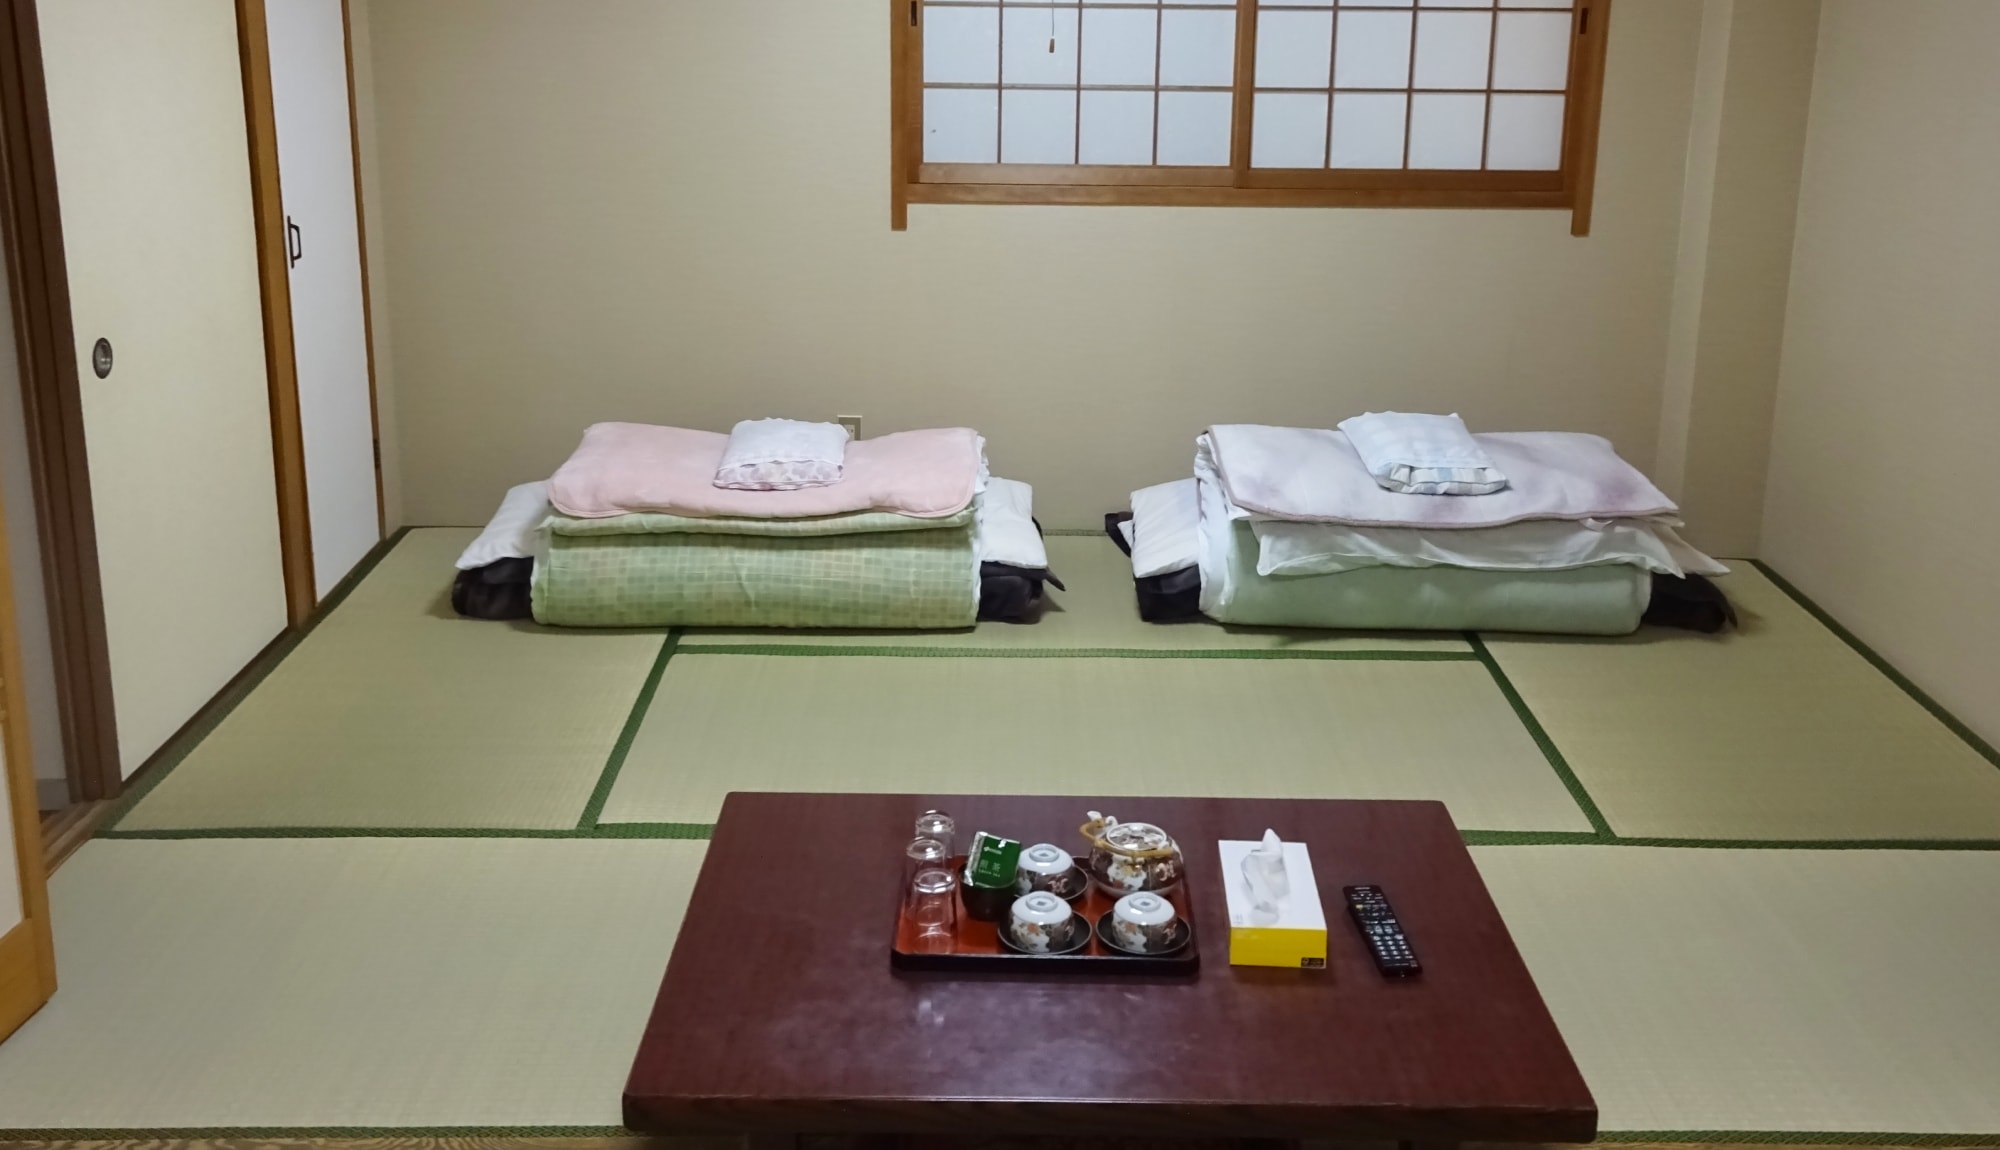 ・Japanese style room 12 tatami mats